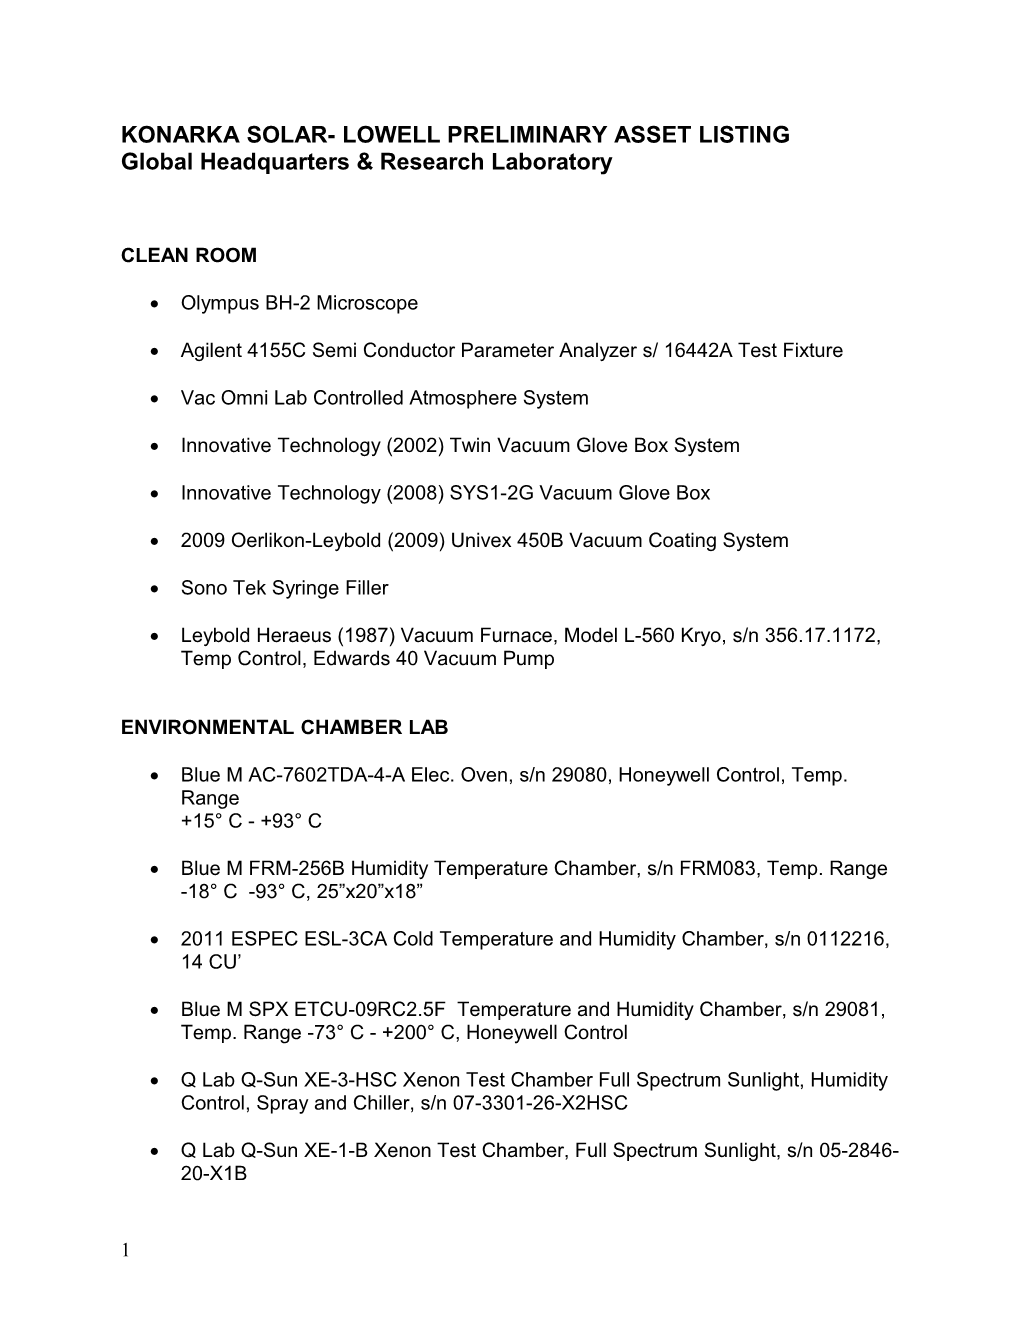 Konarka Solar- Lowell Preliminary Asset Listing